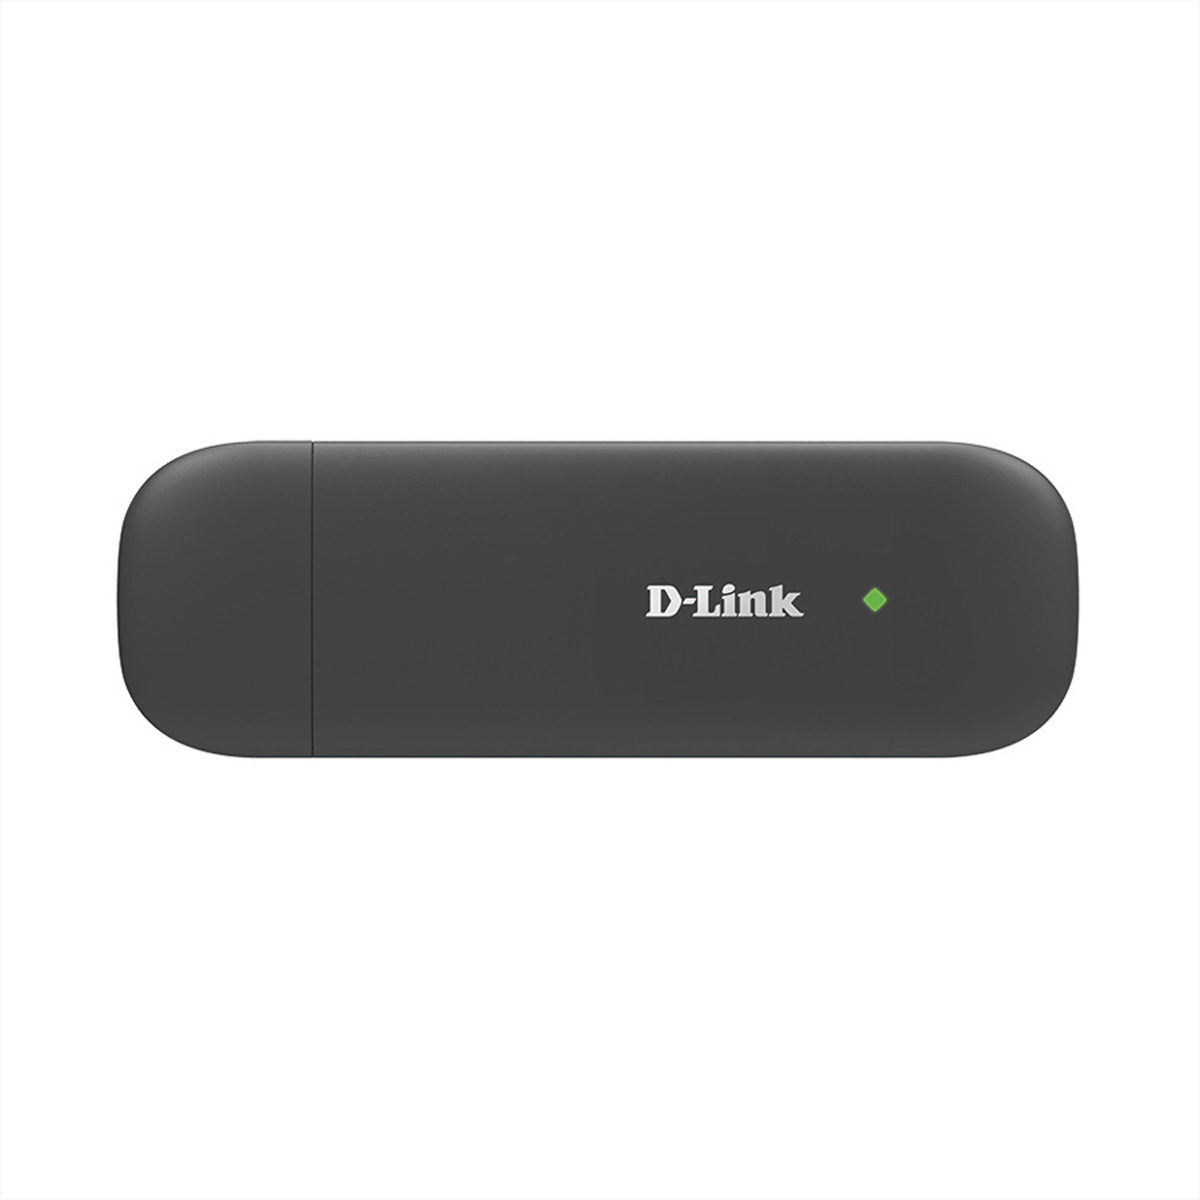 D-Link DWM-222 4G LTE USB Adapter 150MBit LTE USB Stick, LTE Cat.4